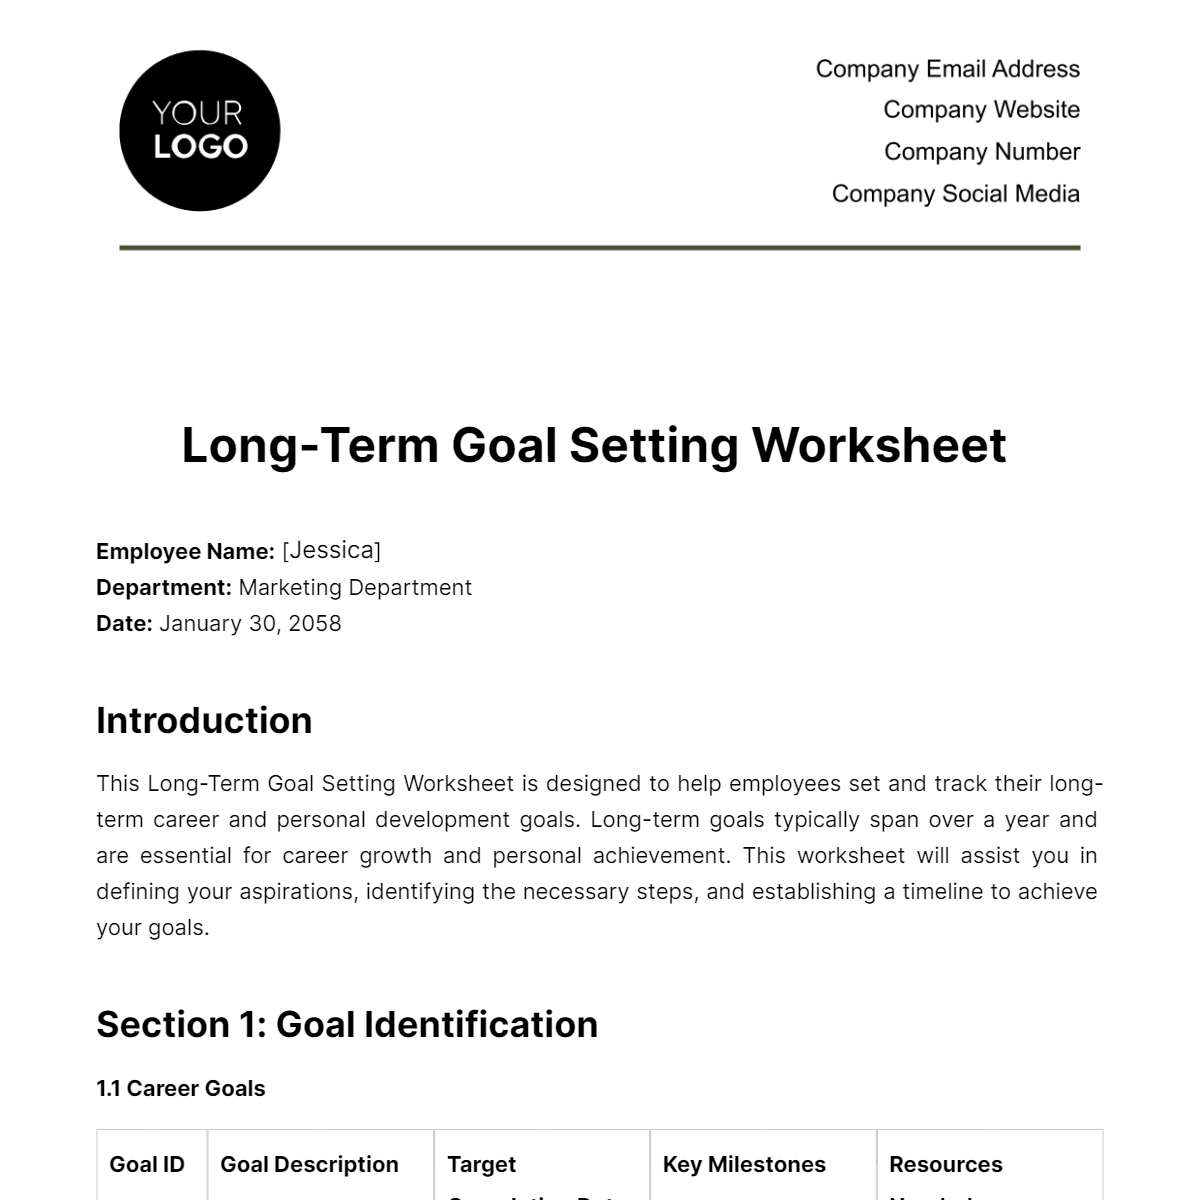 Long-term Goal Setting Worksheet HR Template